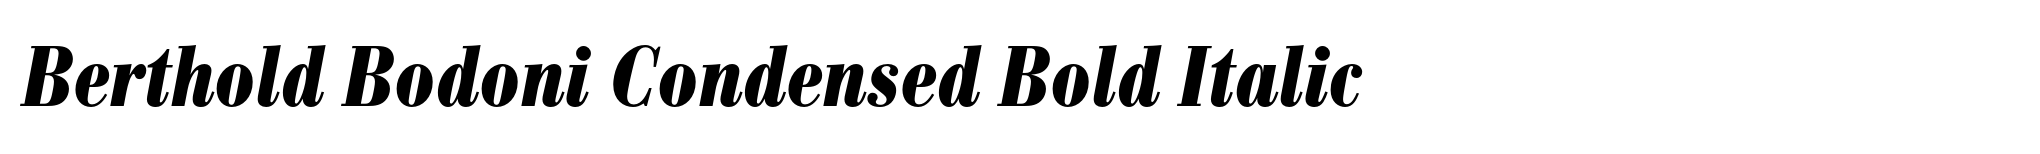 Berthold Bodoni Condensed Bold Italic image